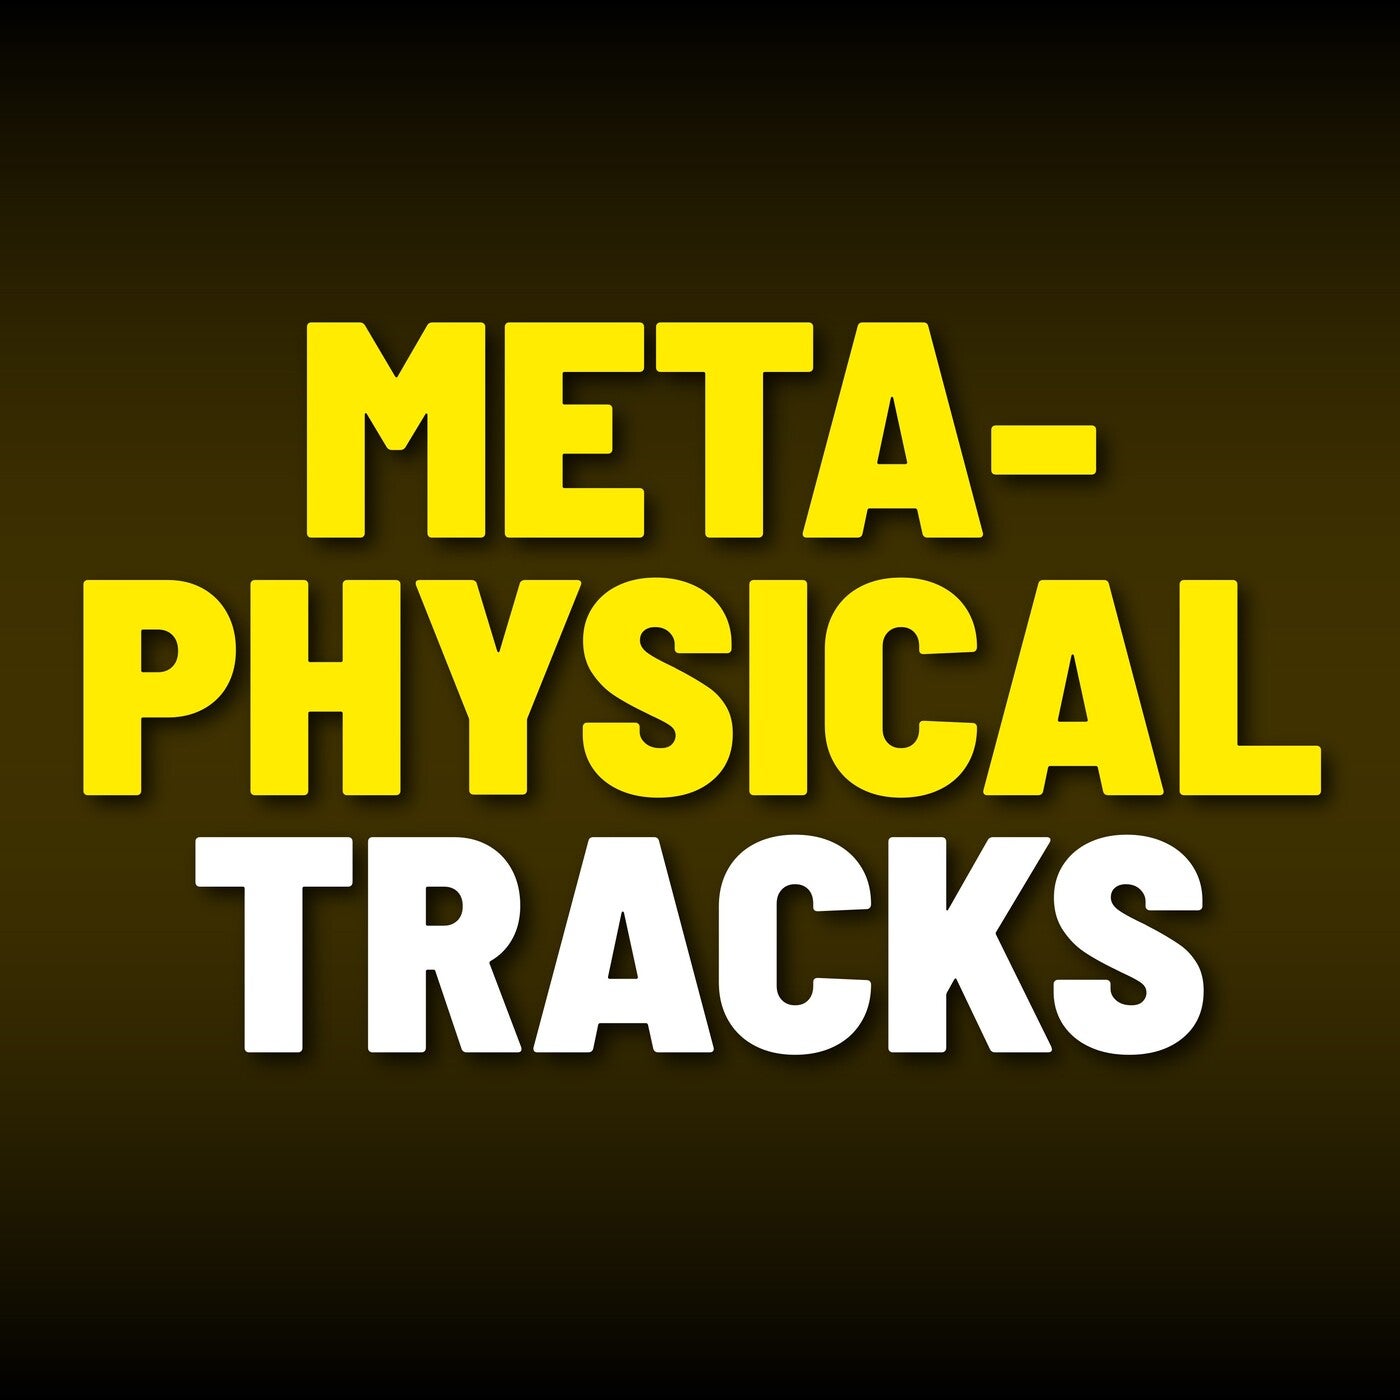 Metaphysical Tracks